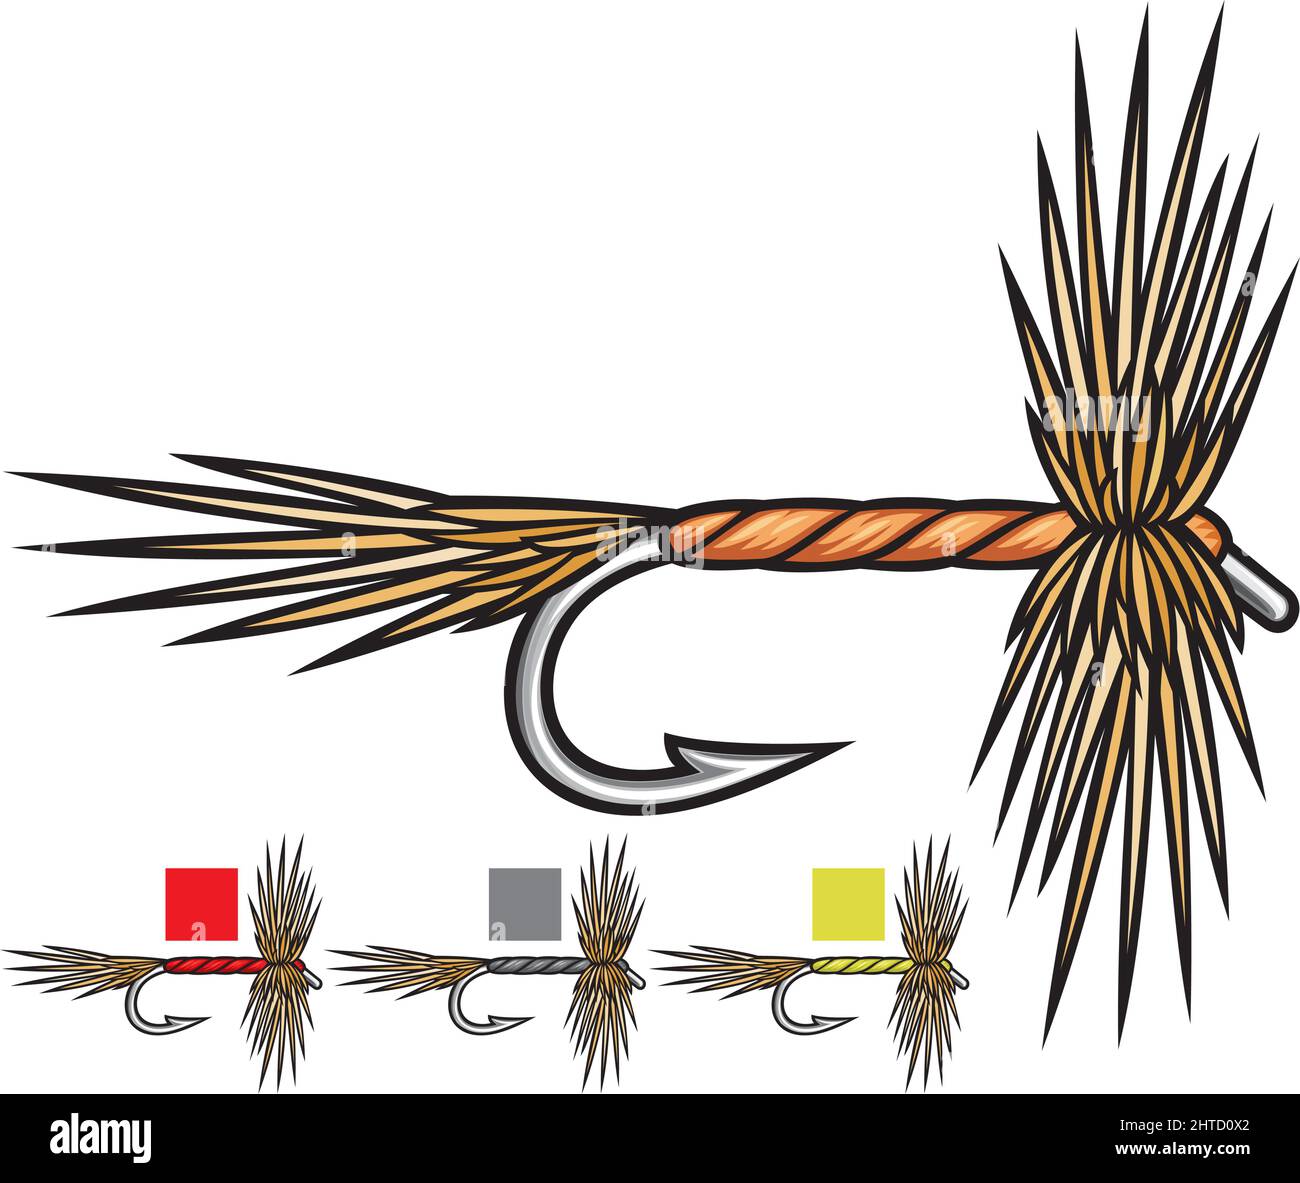 Fly fishing flies vector illustration Stock Vector Image & Art - Alamy